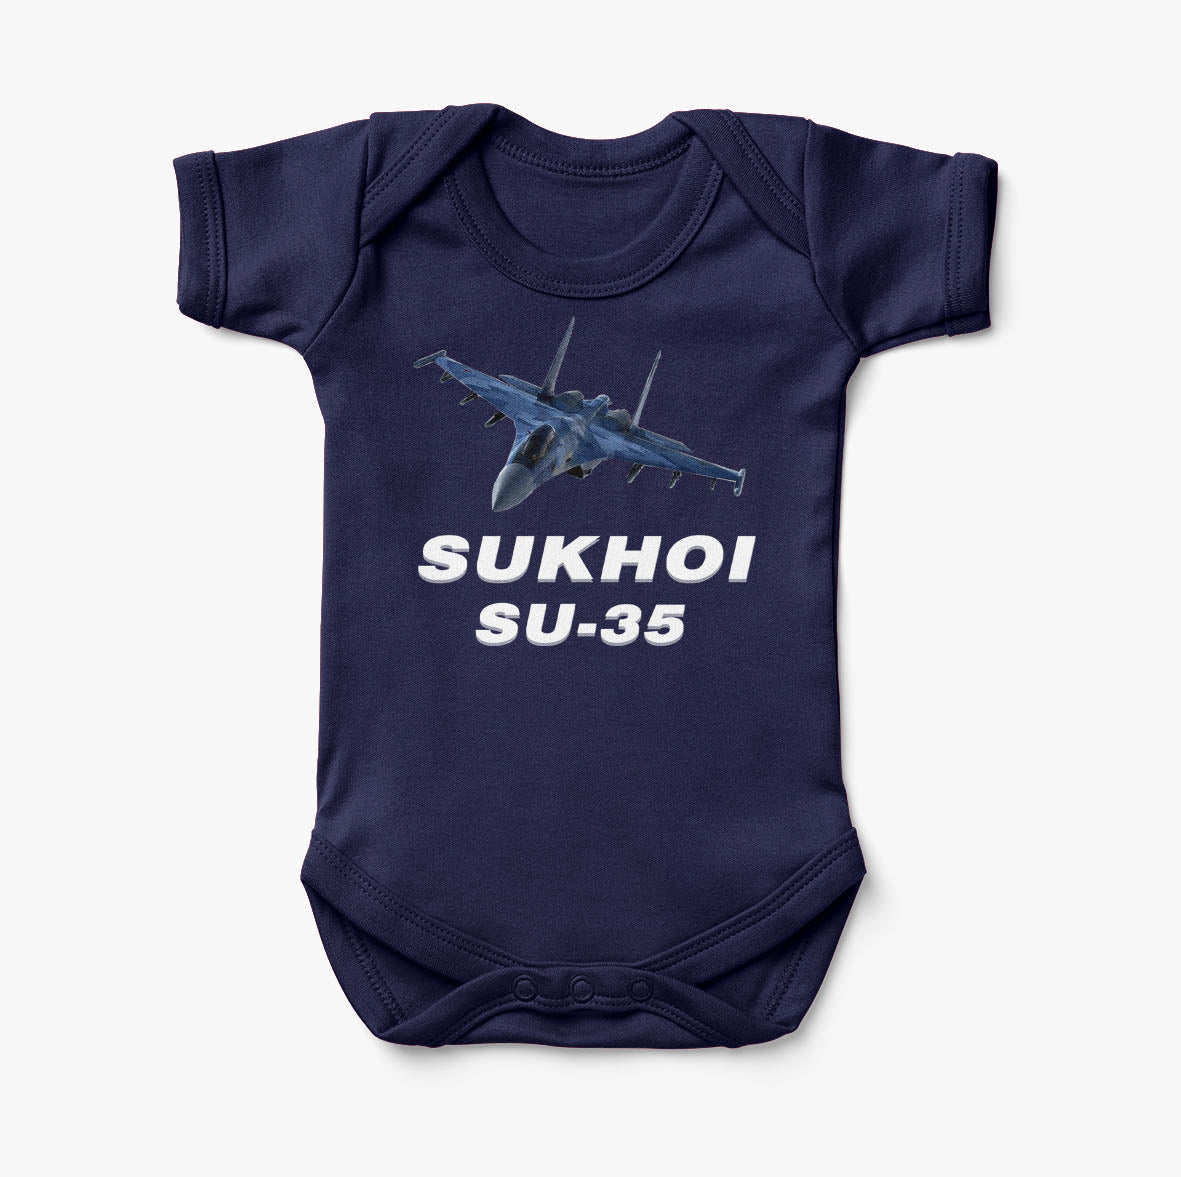 The Sukhoi SU-35 Designed Baby Bodysuits